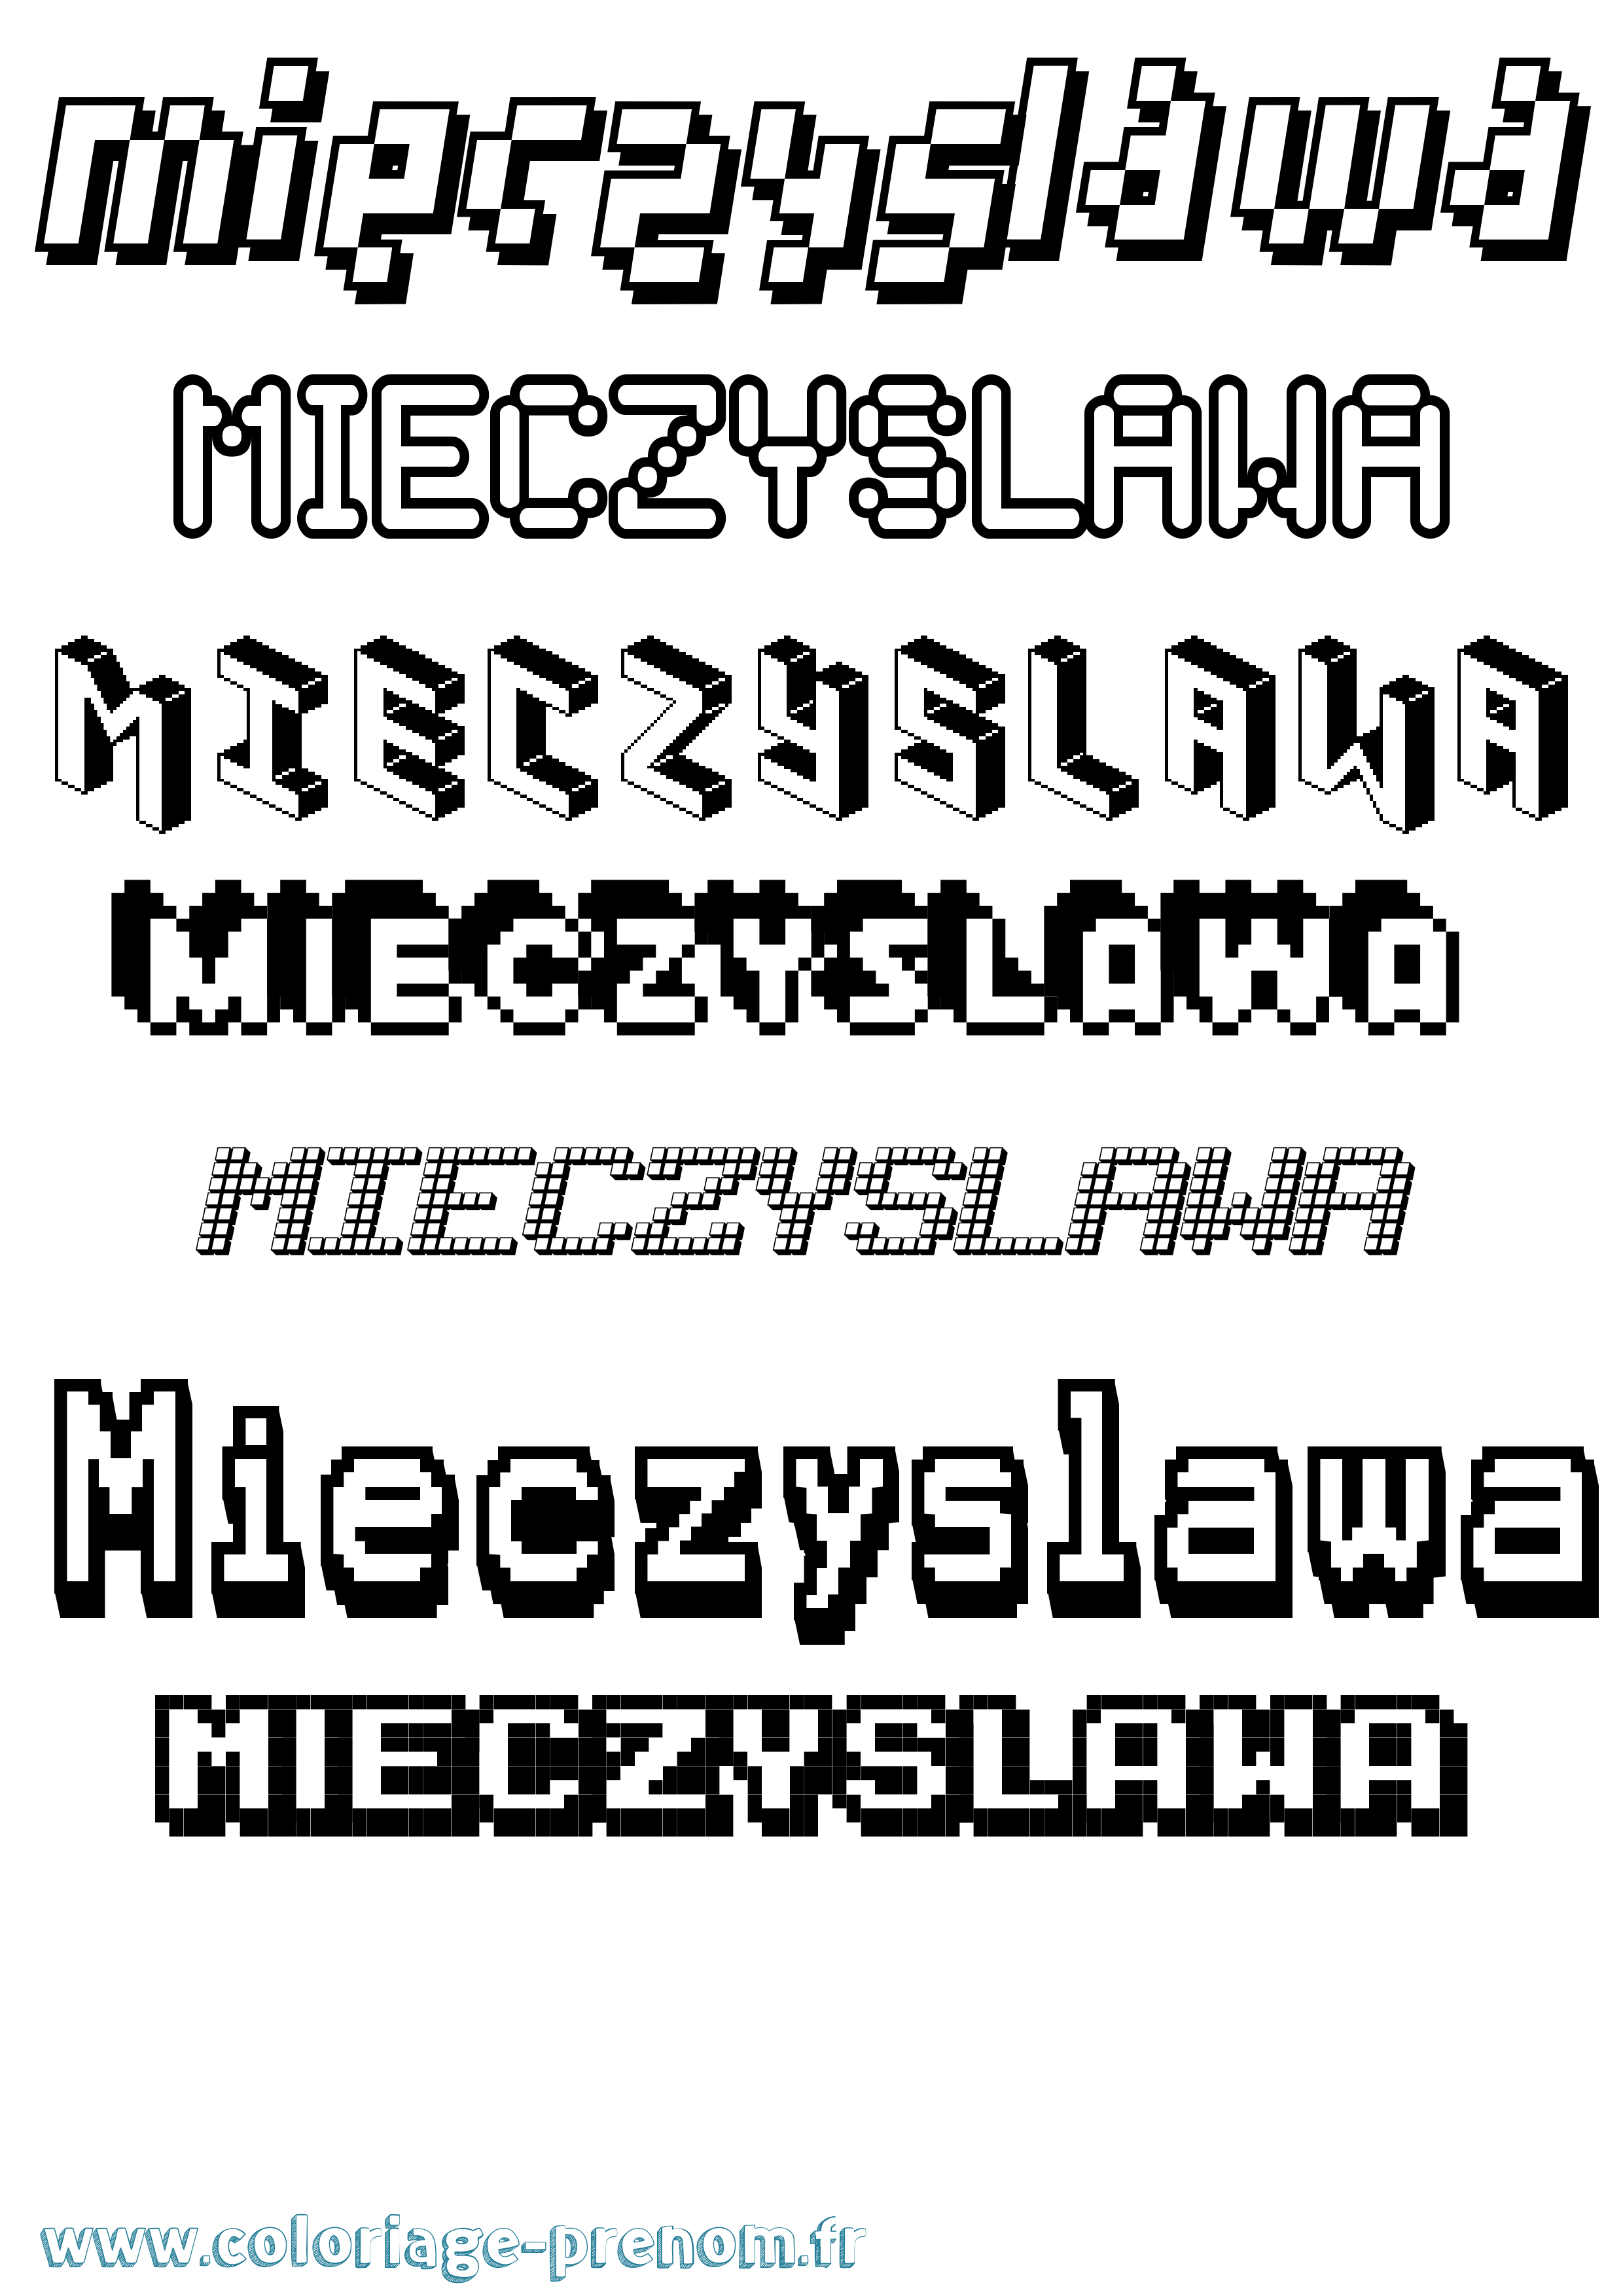 Coloriage prénom Mieczyslawa Pixel